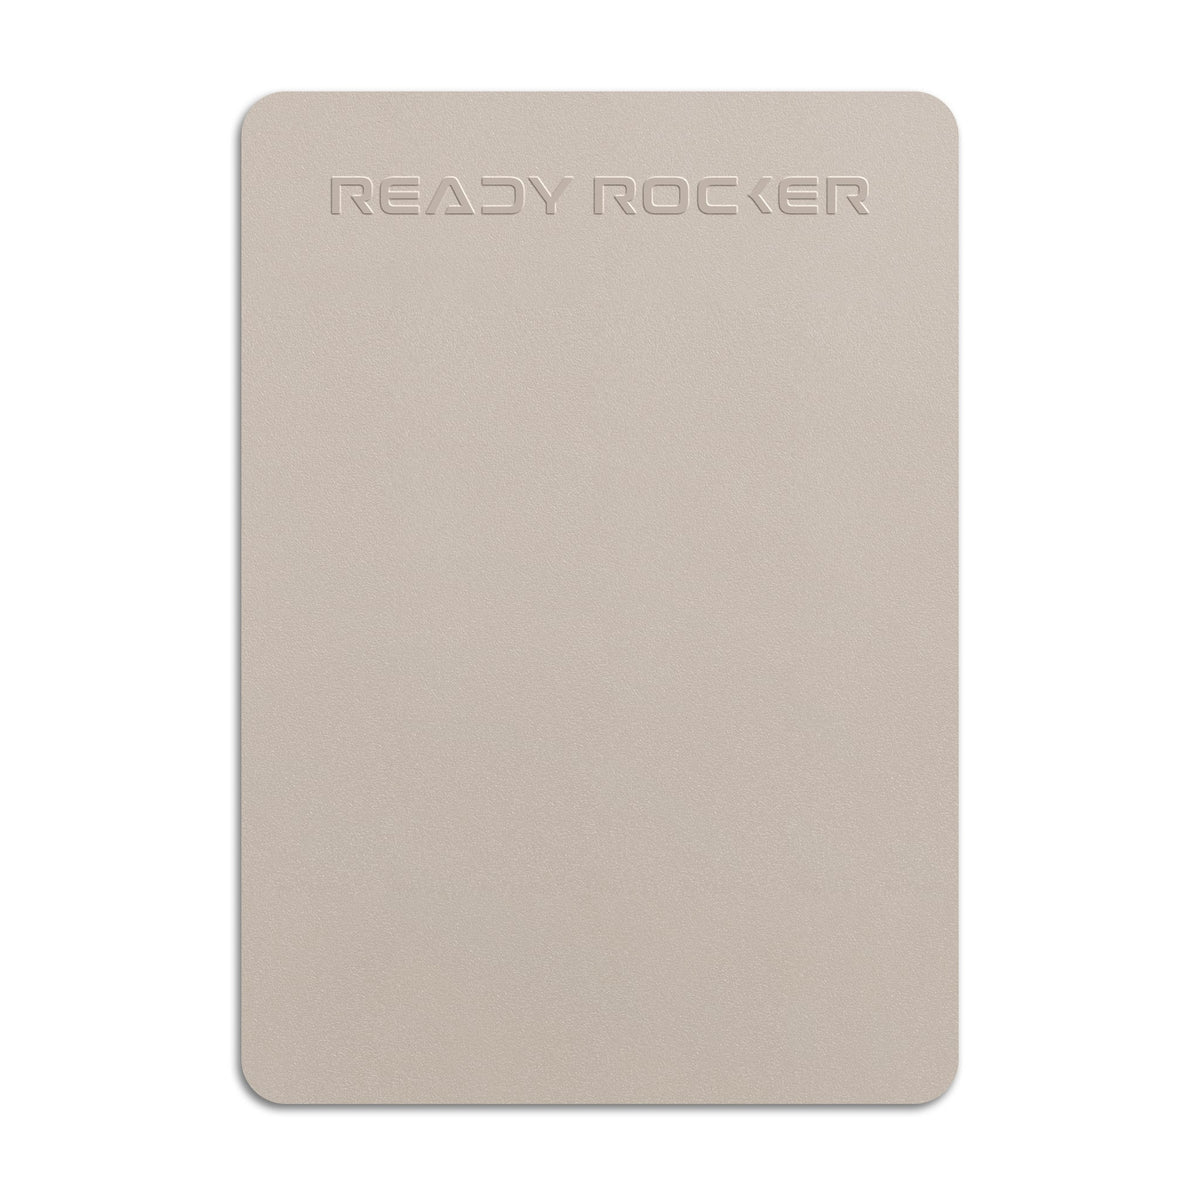 READY ROCKER LUMBAR Support Seat Rocker Cloud White Foam / Aluminum 1 Ct  $99.00 - PicClick